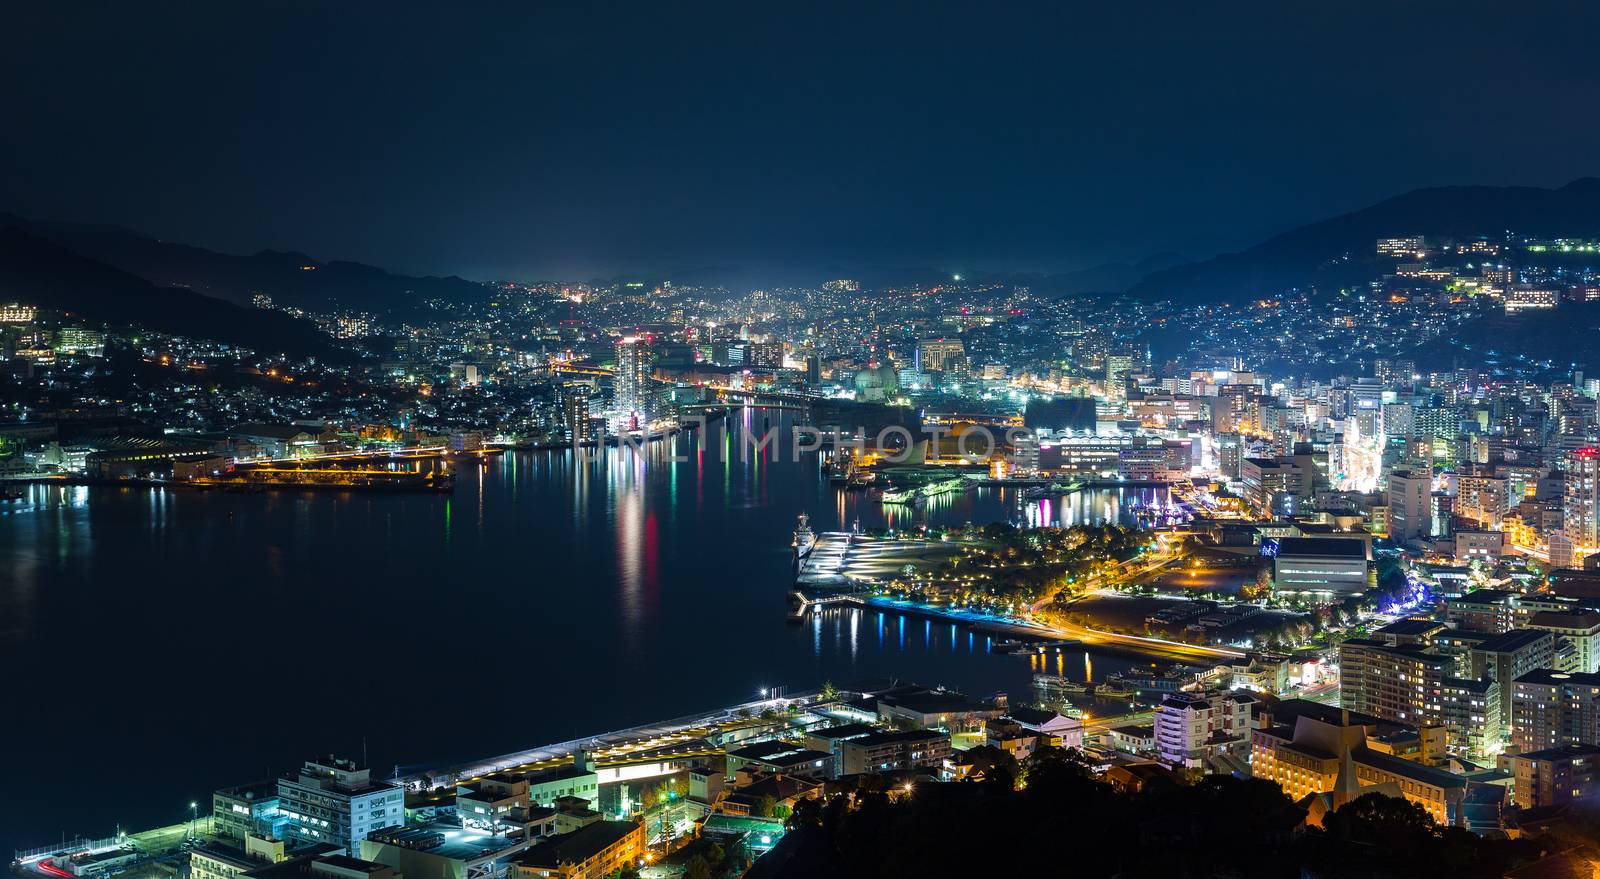 Night shot of Nagasaki city in Japan